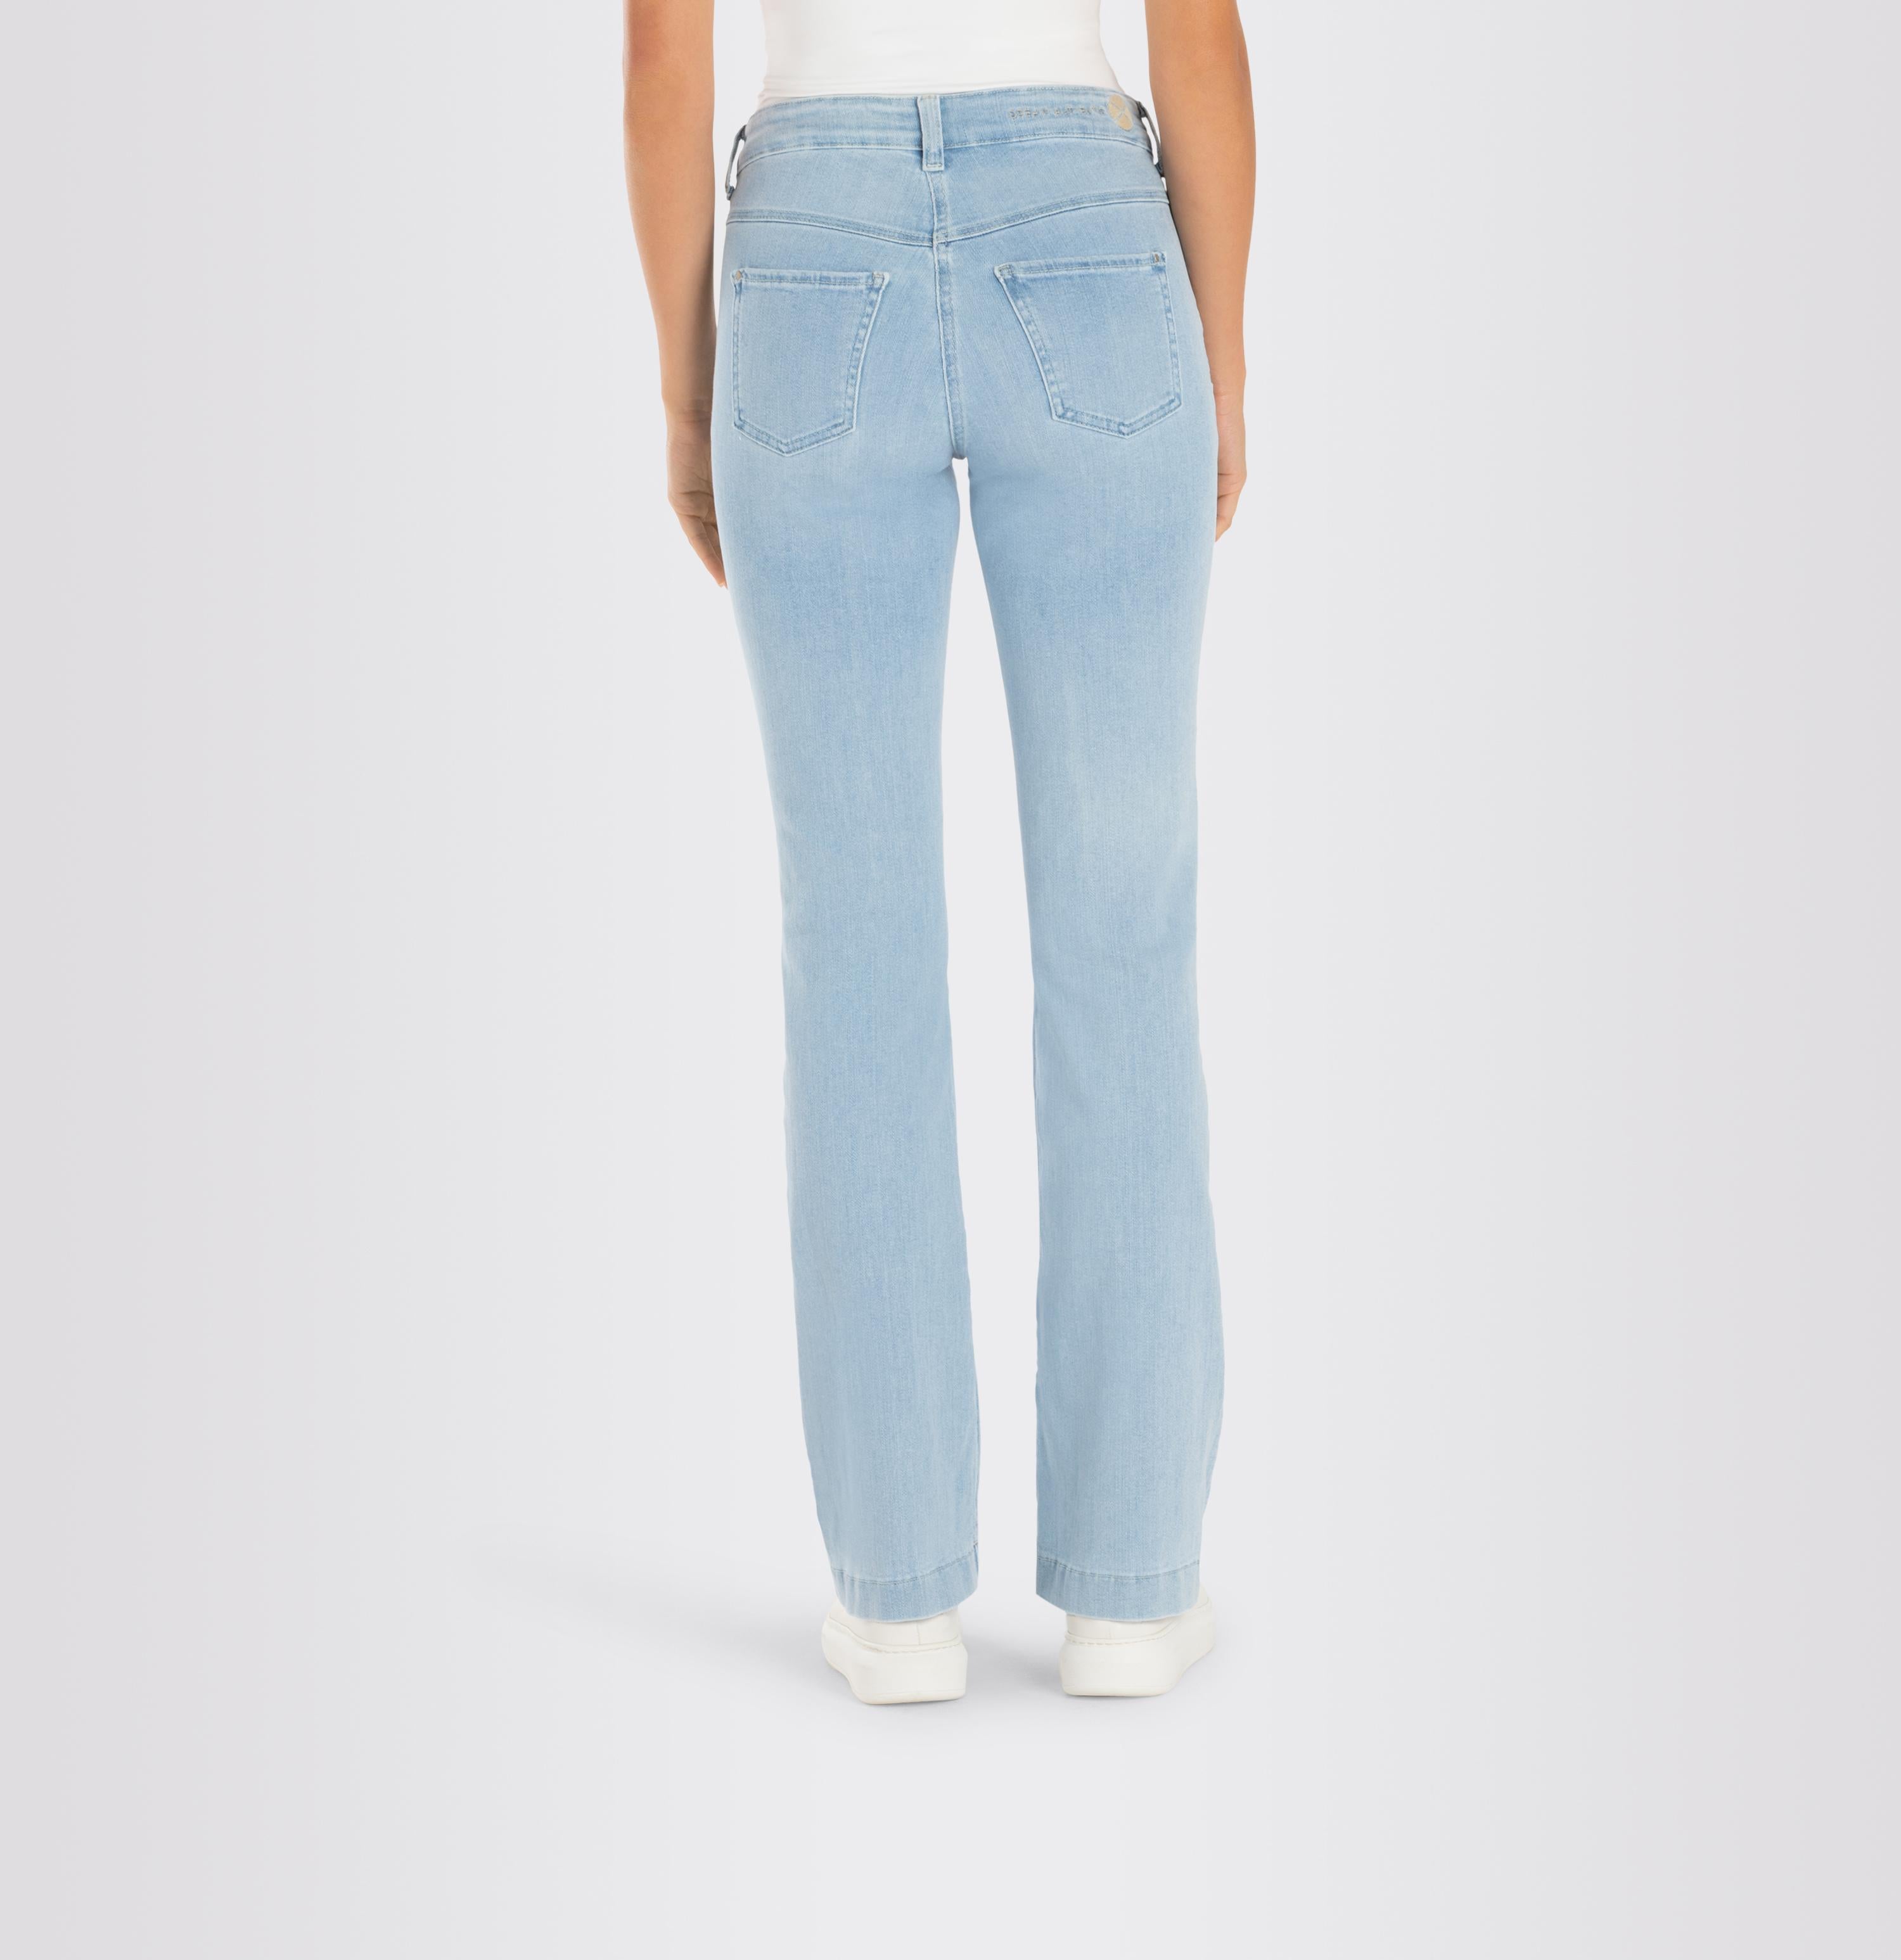 Jeans Cut Dream Boot – Boutique MAC Posh